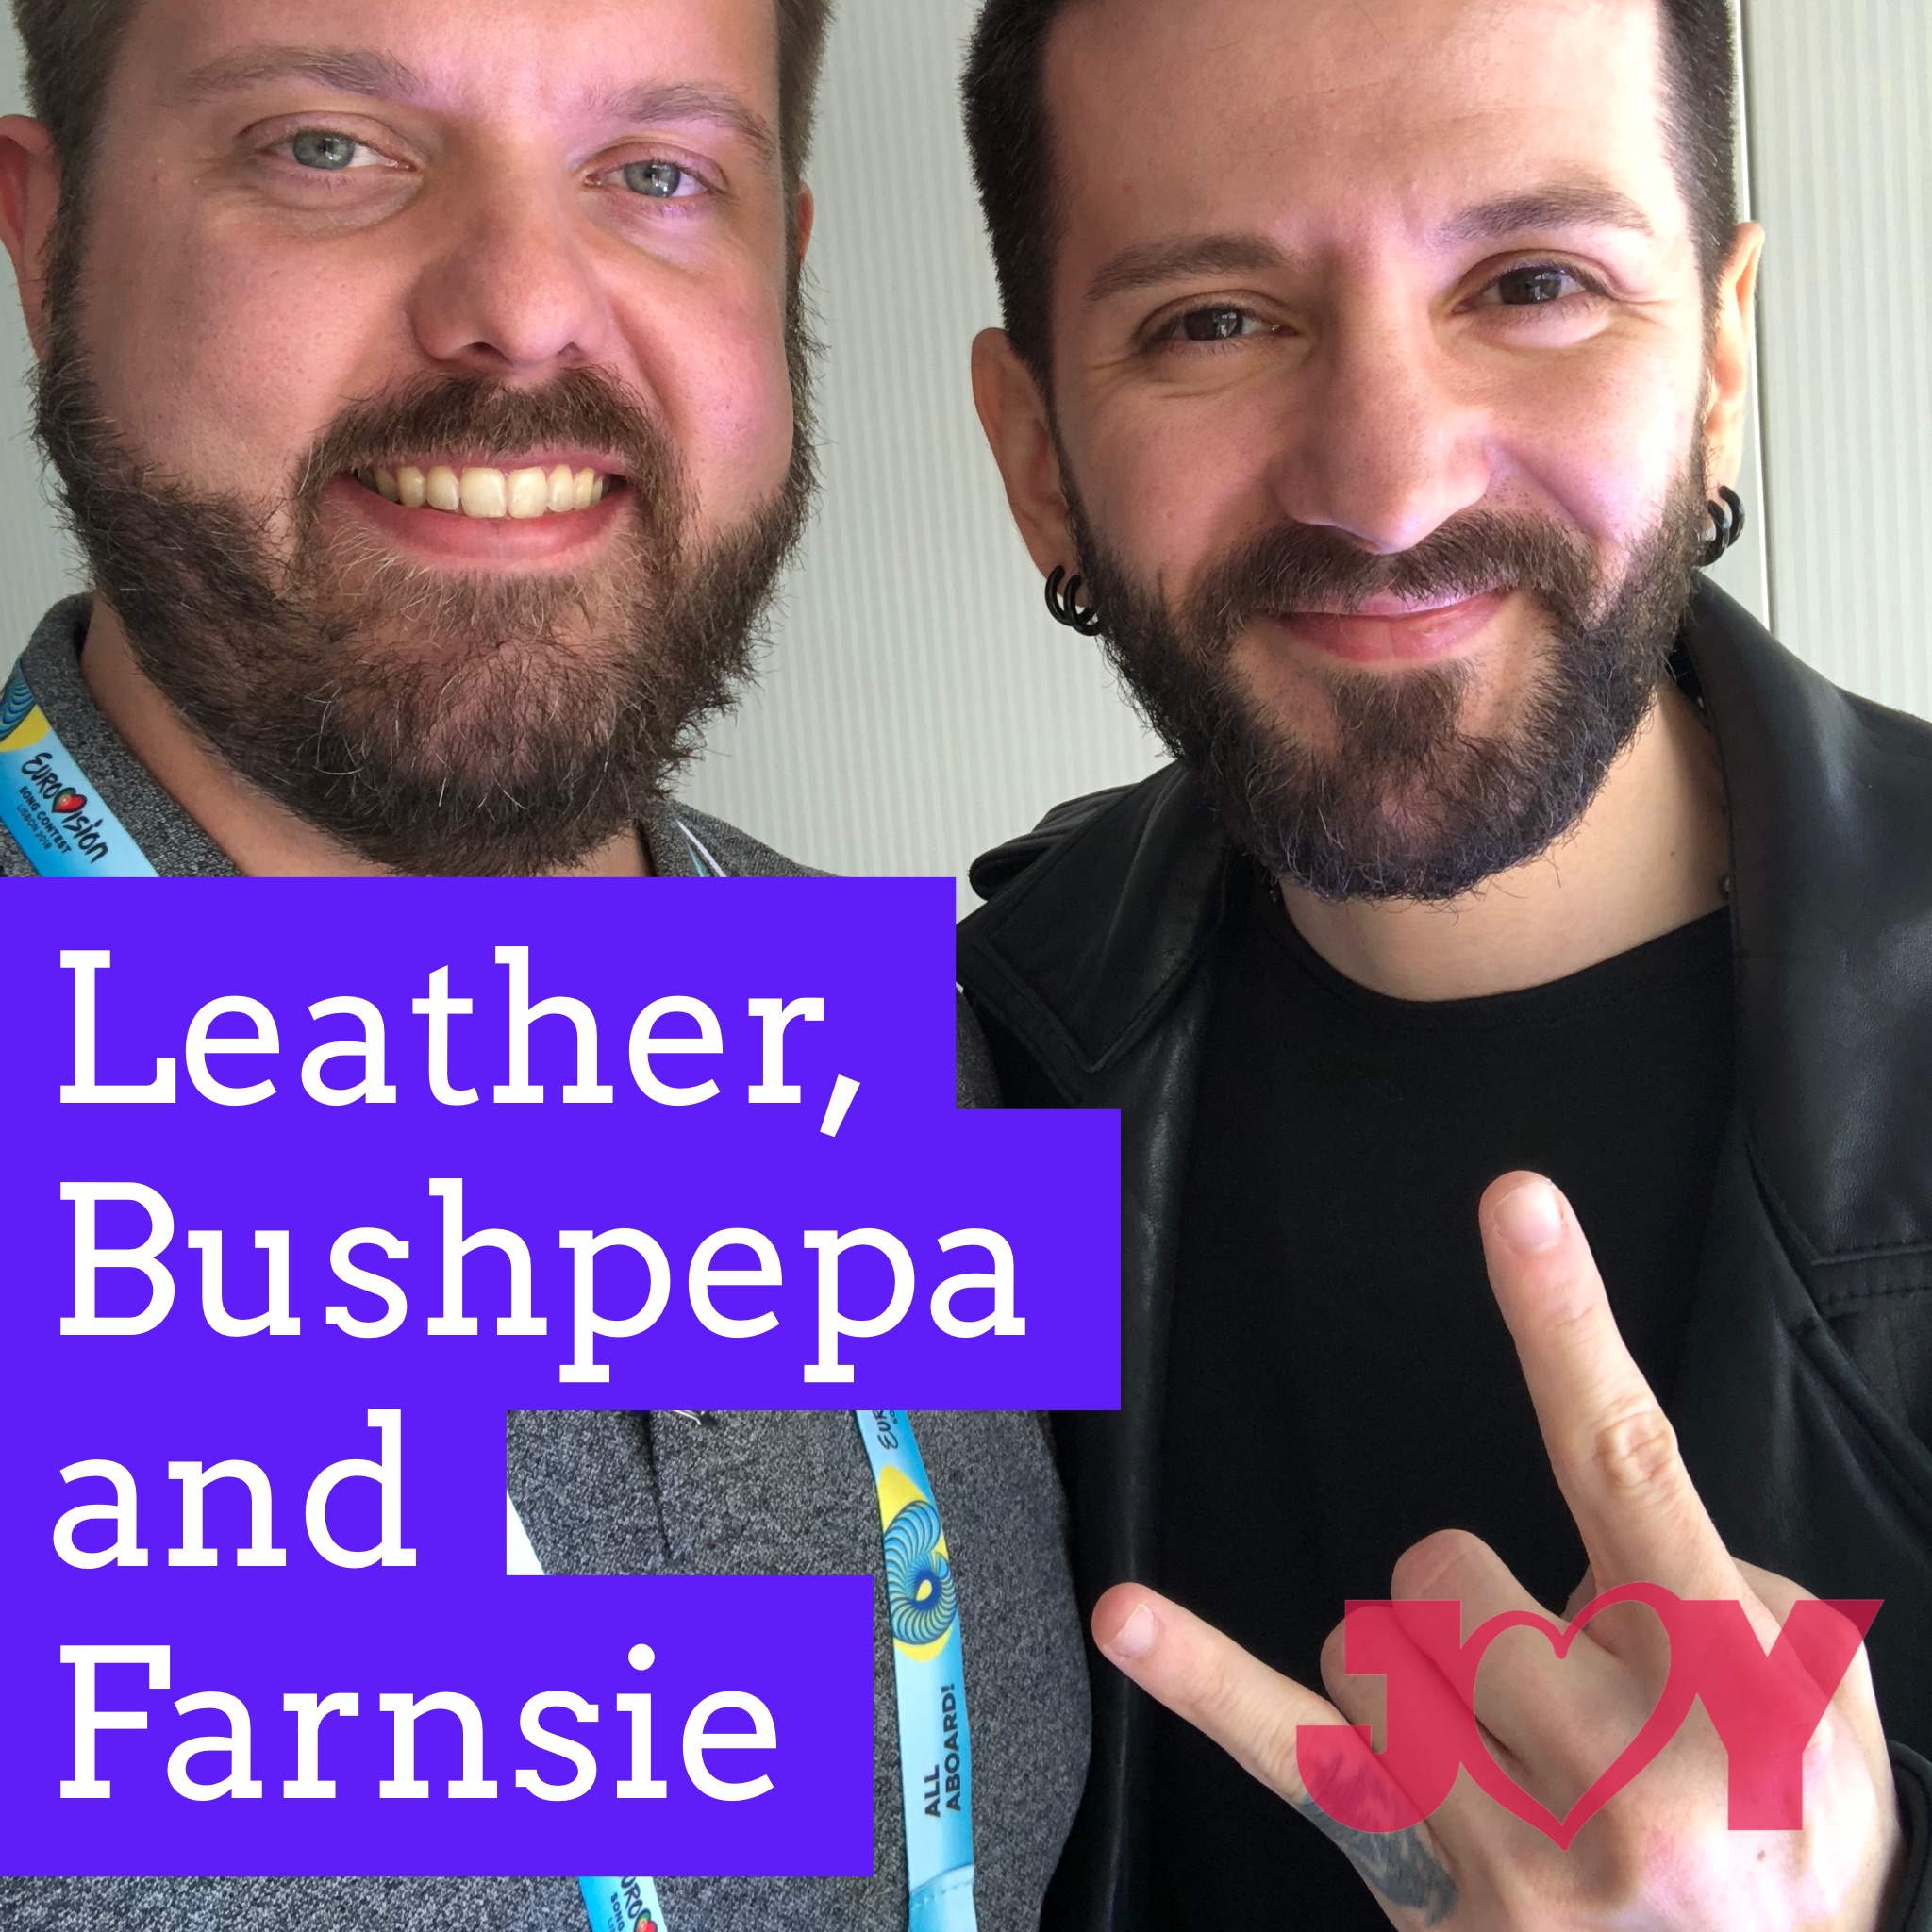 Albania: Leather, Bushpepa and Farnsie